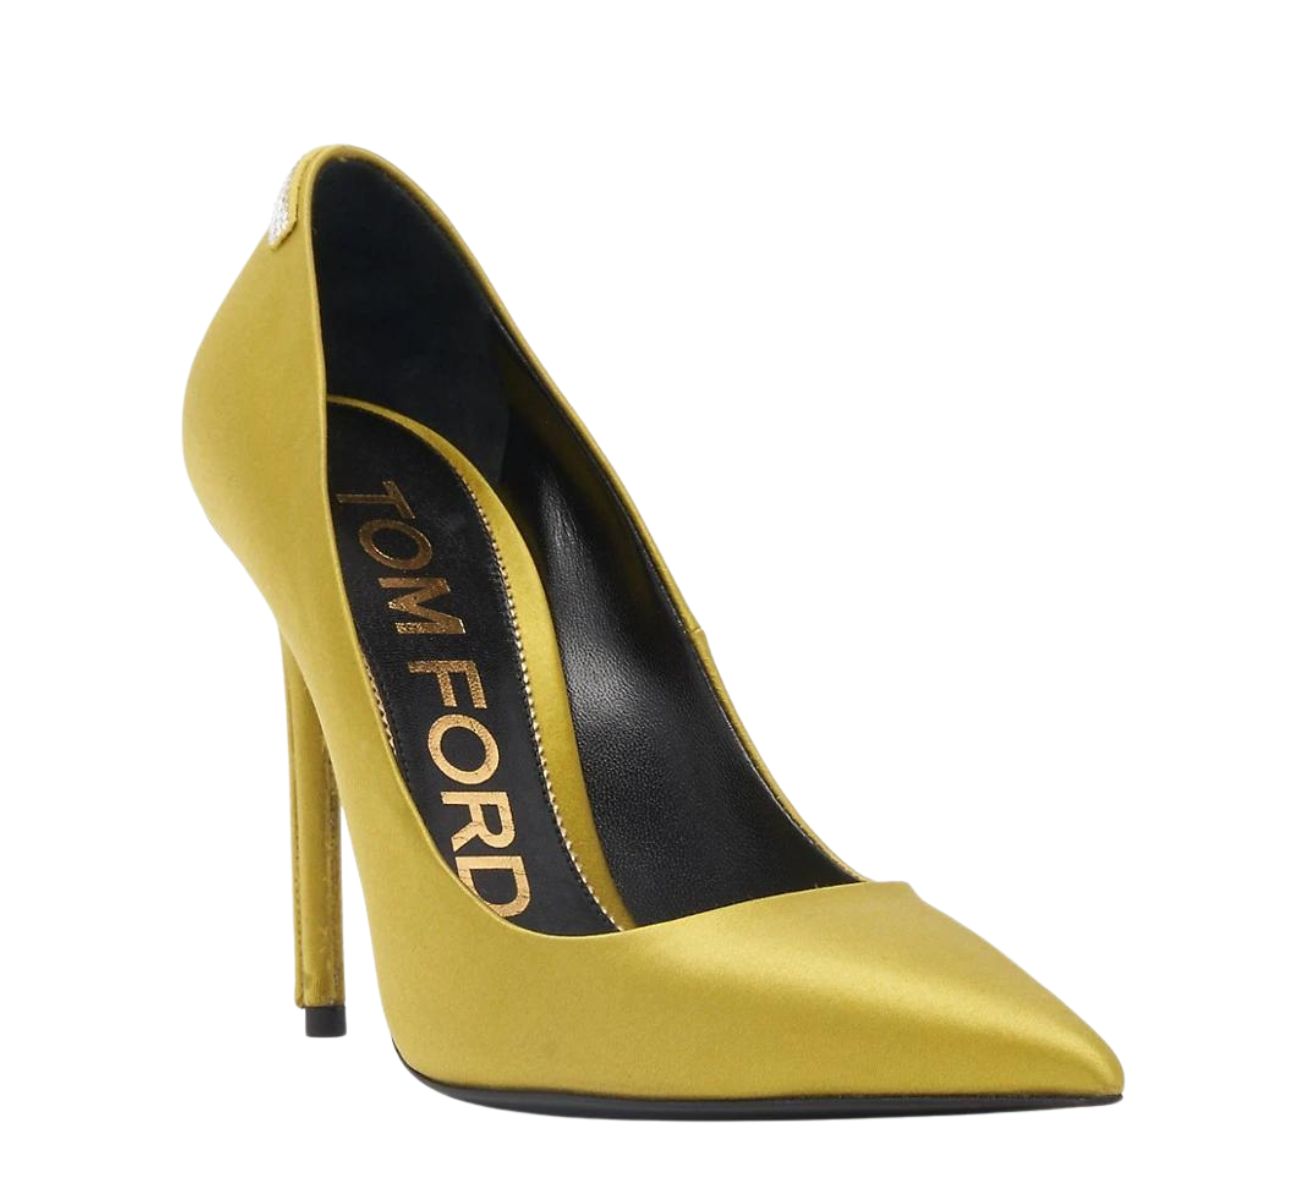 Yellow heeled pump on white background.